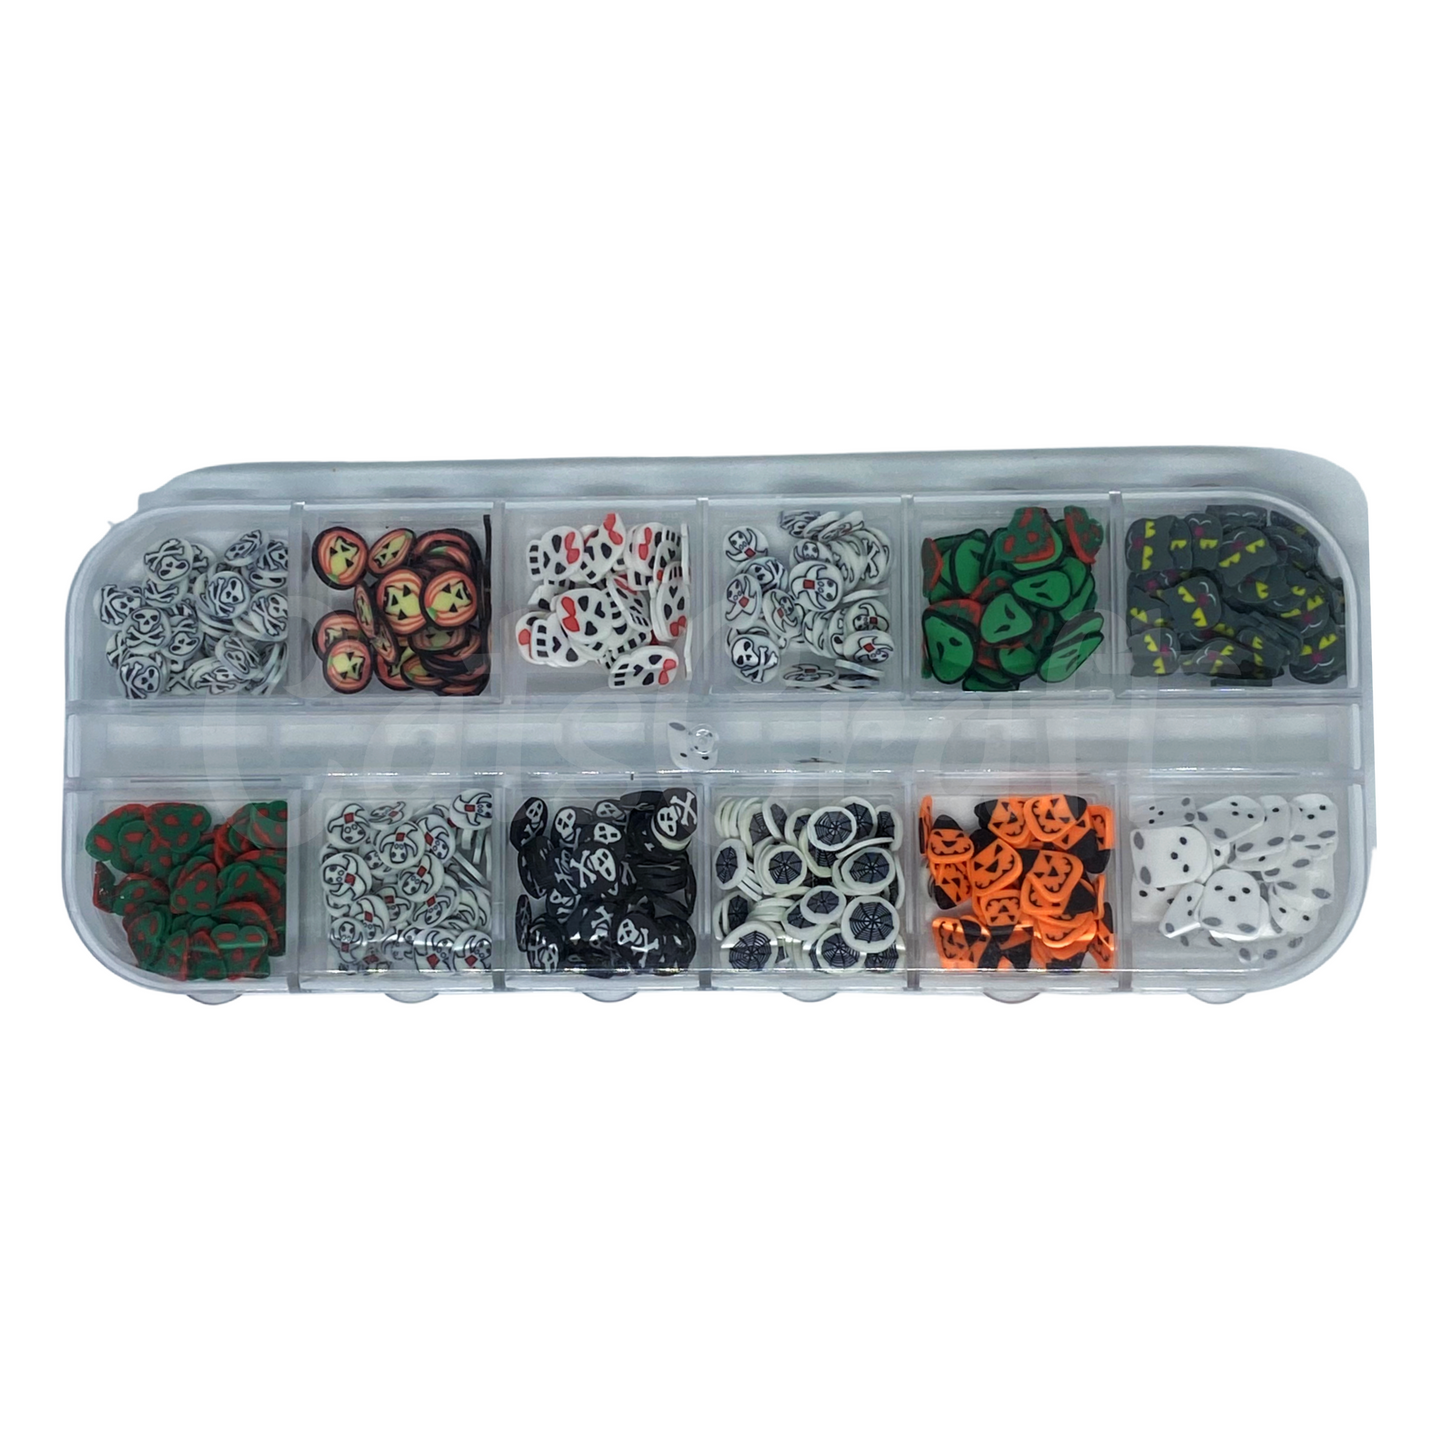 12 Grid set Fimo HALLOWEEN Shapes Slices Polymer Clay Sprinkles for Slime Filling Materials DIY